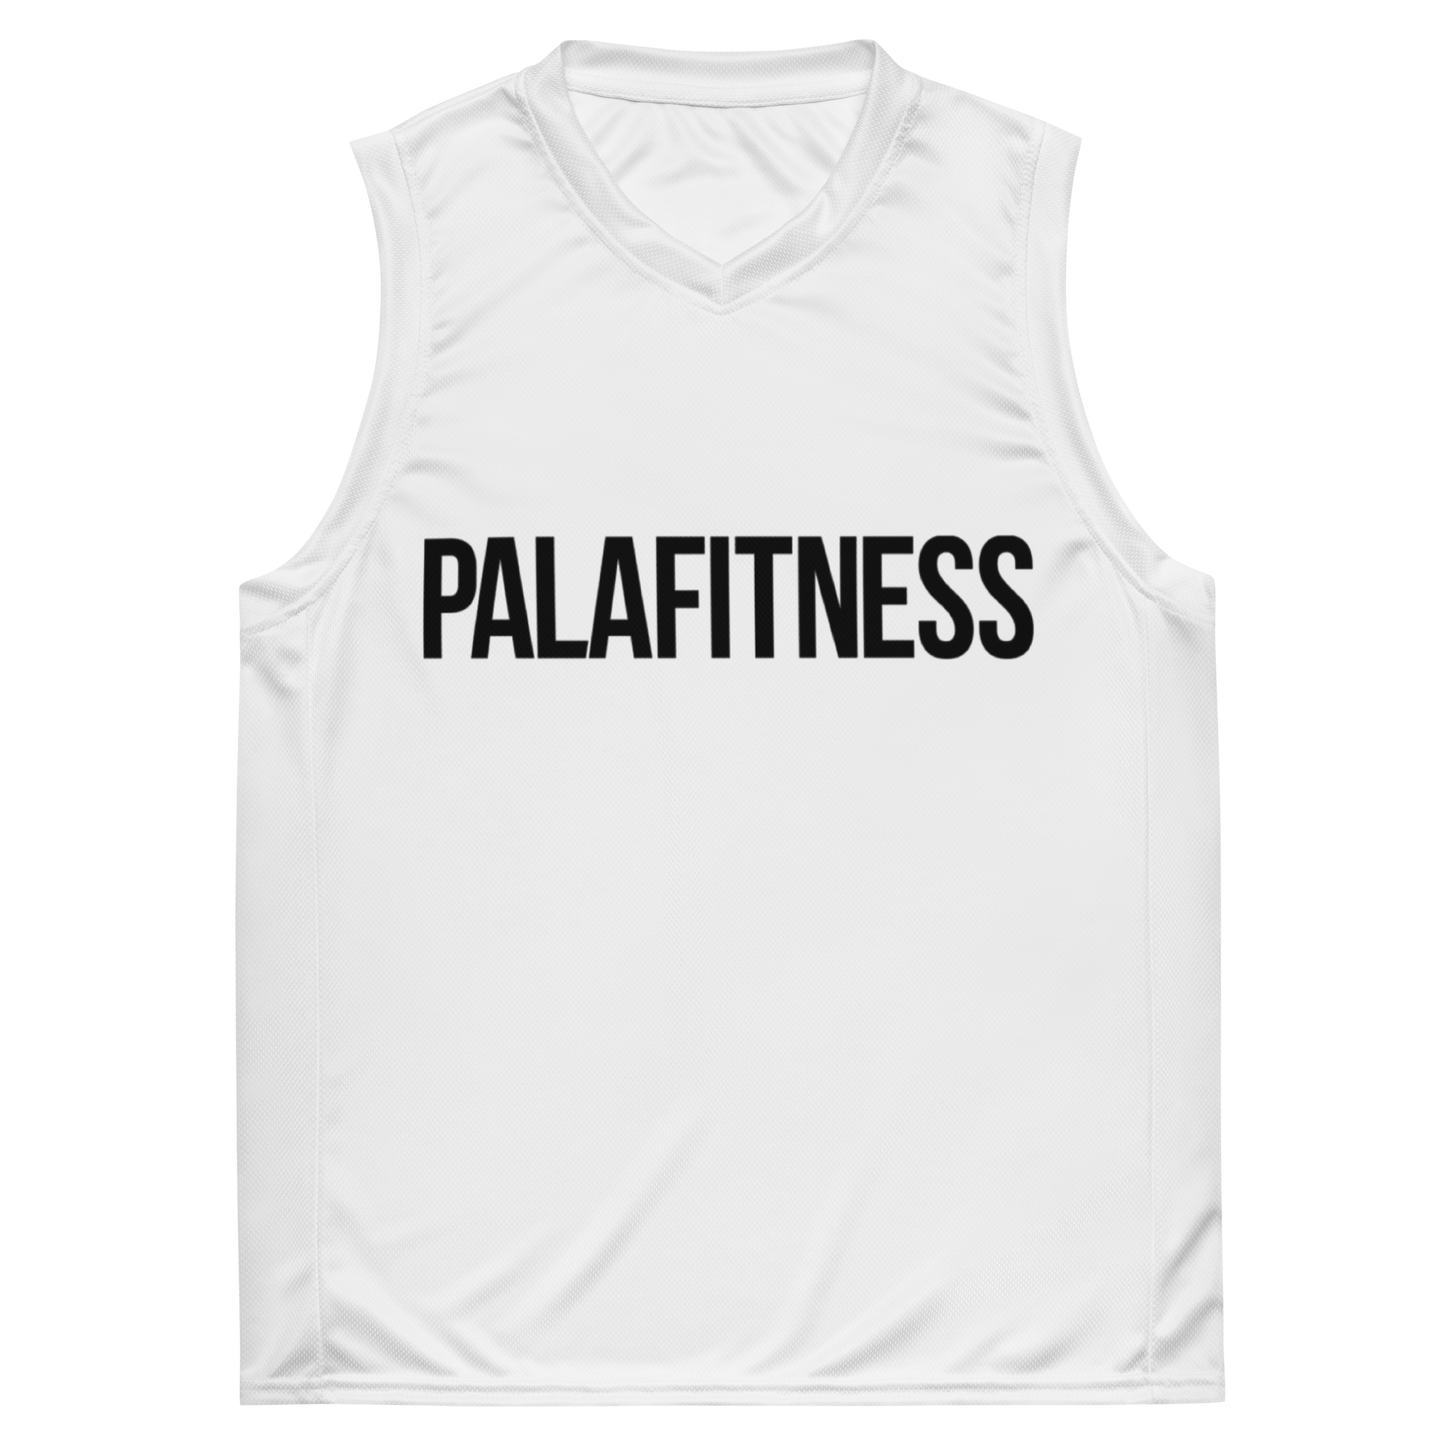 Palafitness - Maglietta da basket unisex riciclata